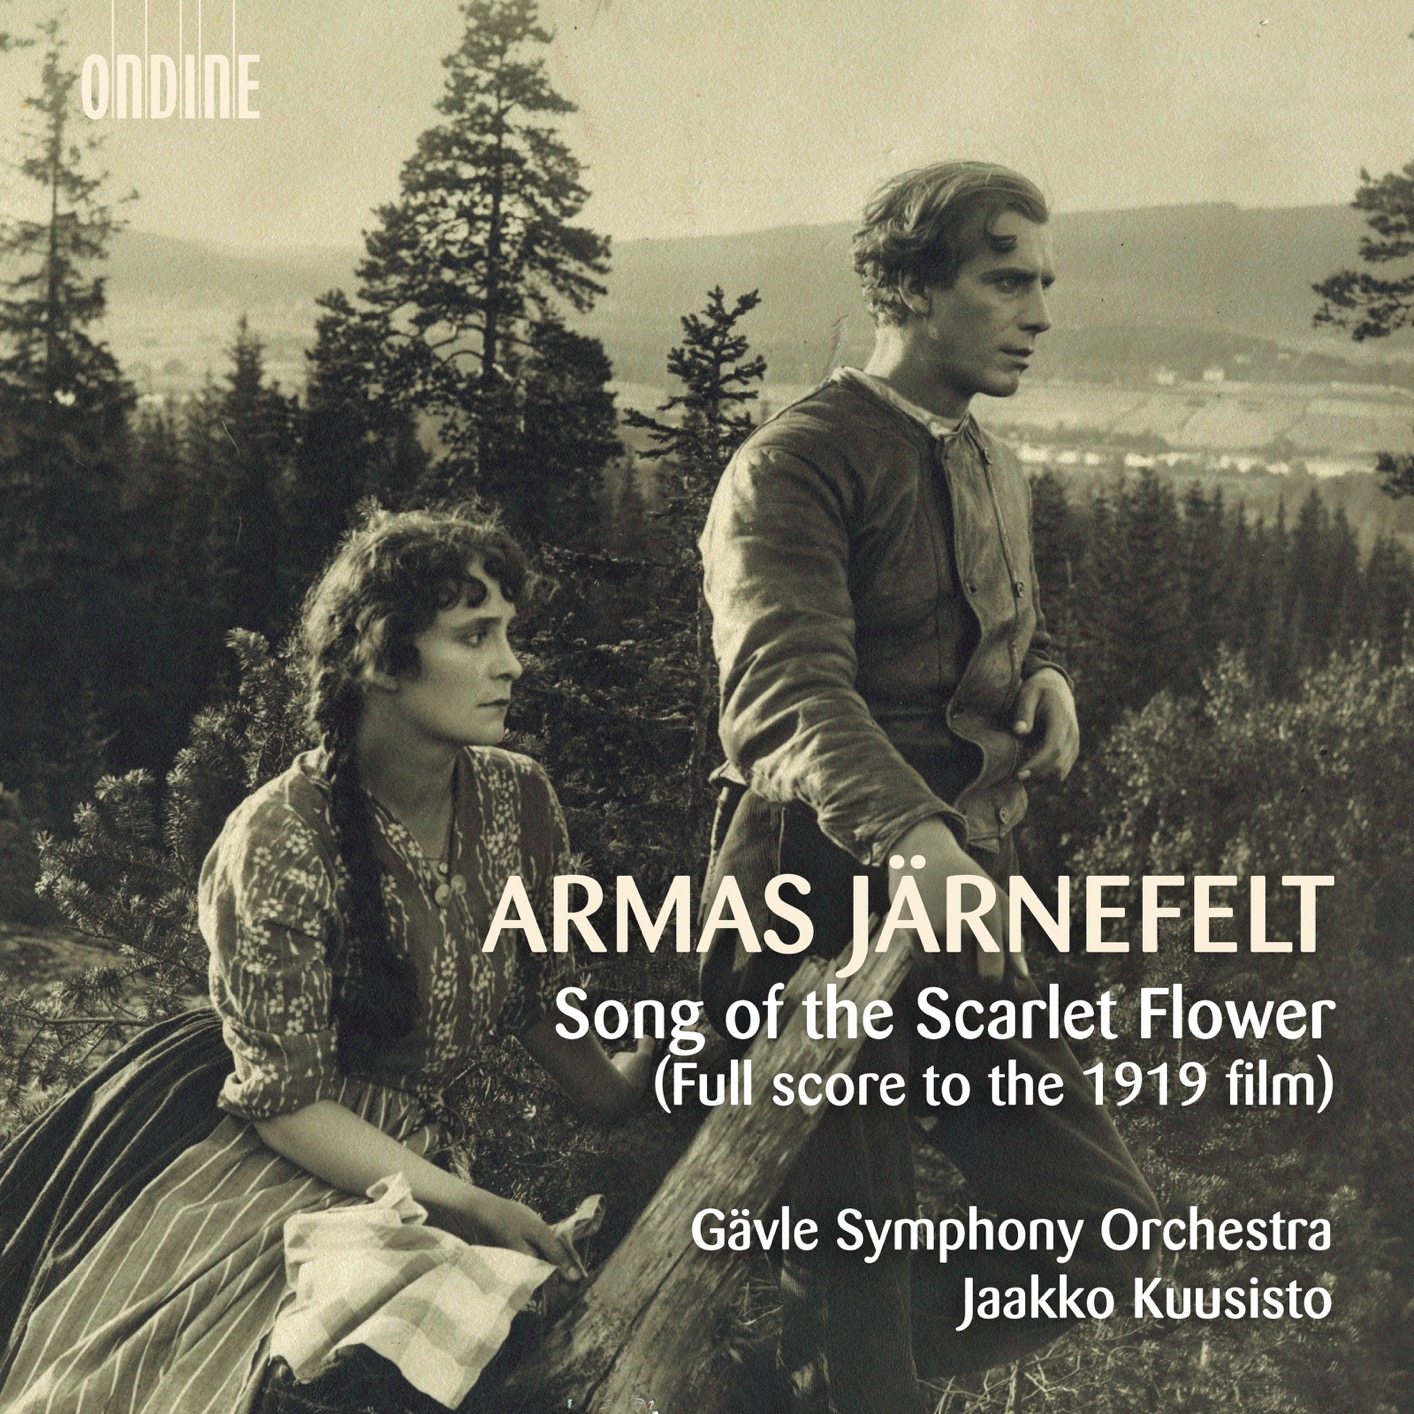 Gavle Symphony Orchestra & Jaakko Kuusisto – Song of the Scarlet Flower (Full Score to the 1919 Film) (2019) [FLAC 24bit/96kHz]